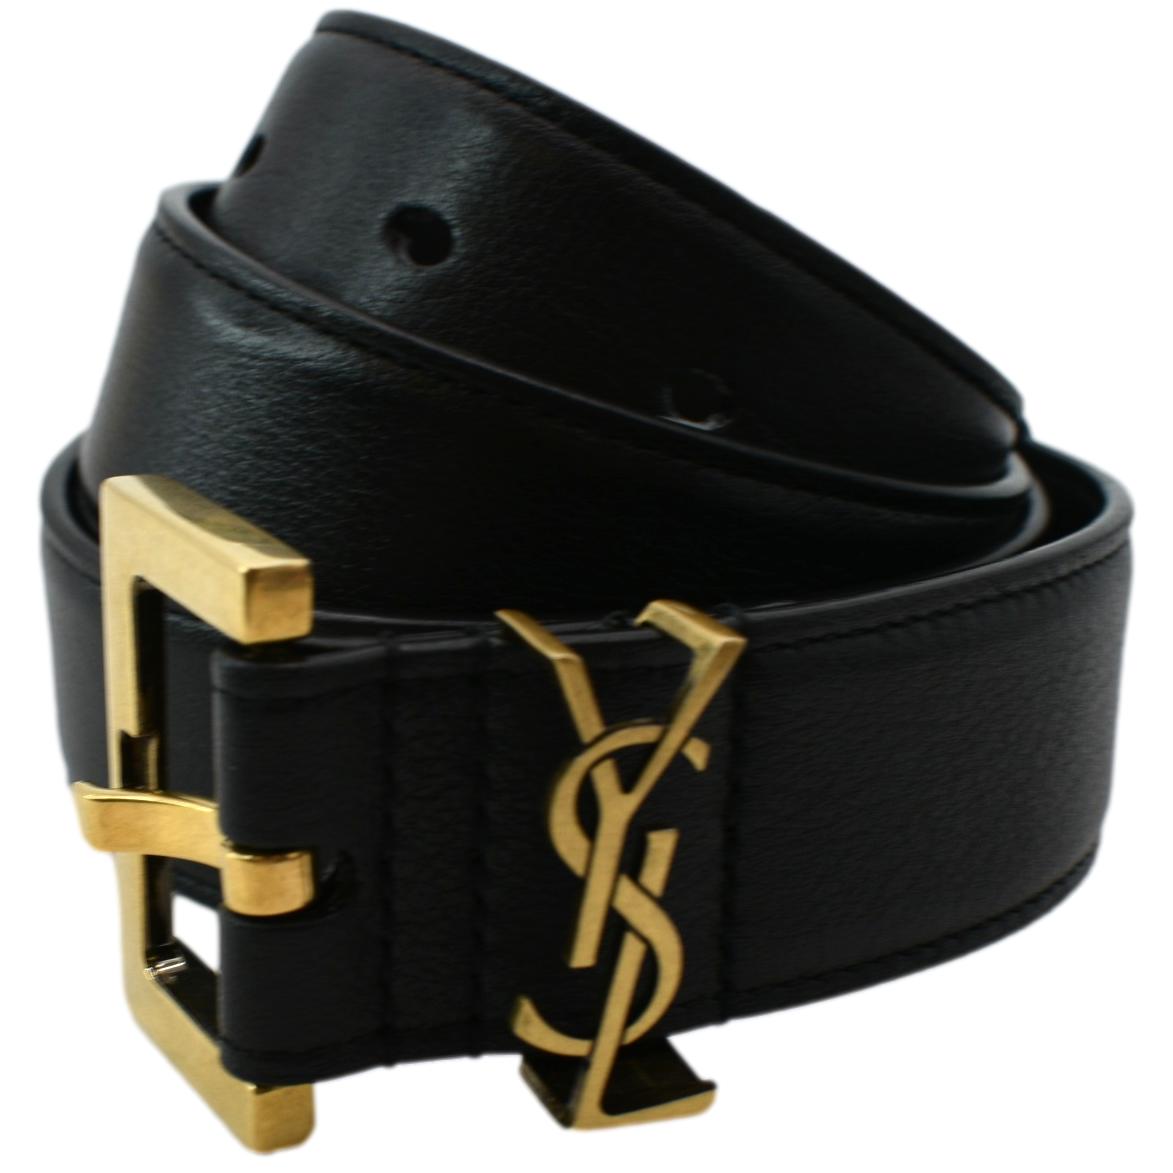 Saint Laurent Ysl Leather Belt in Black